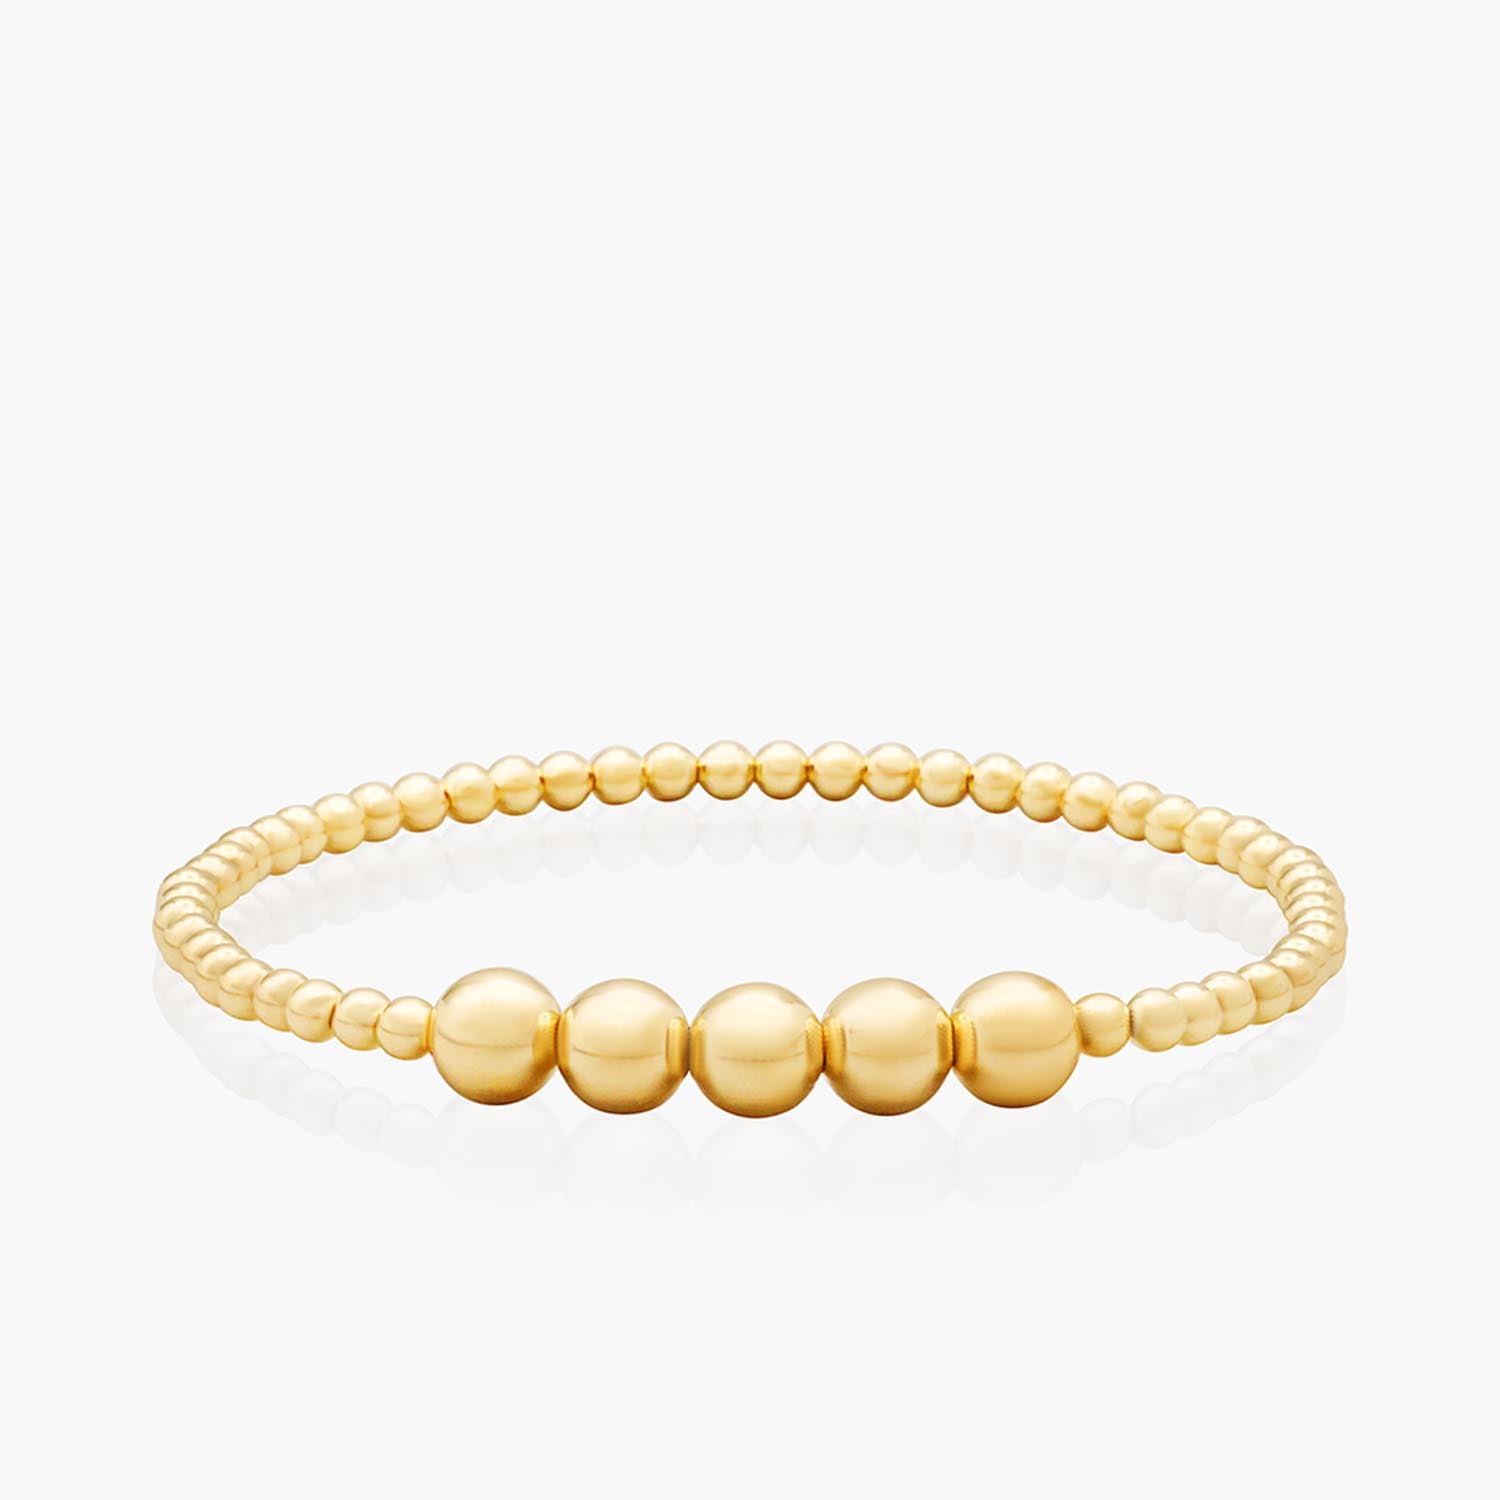 Playa Luna Jewelry Gold Filled Ball Bead Bracelet Riley